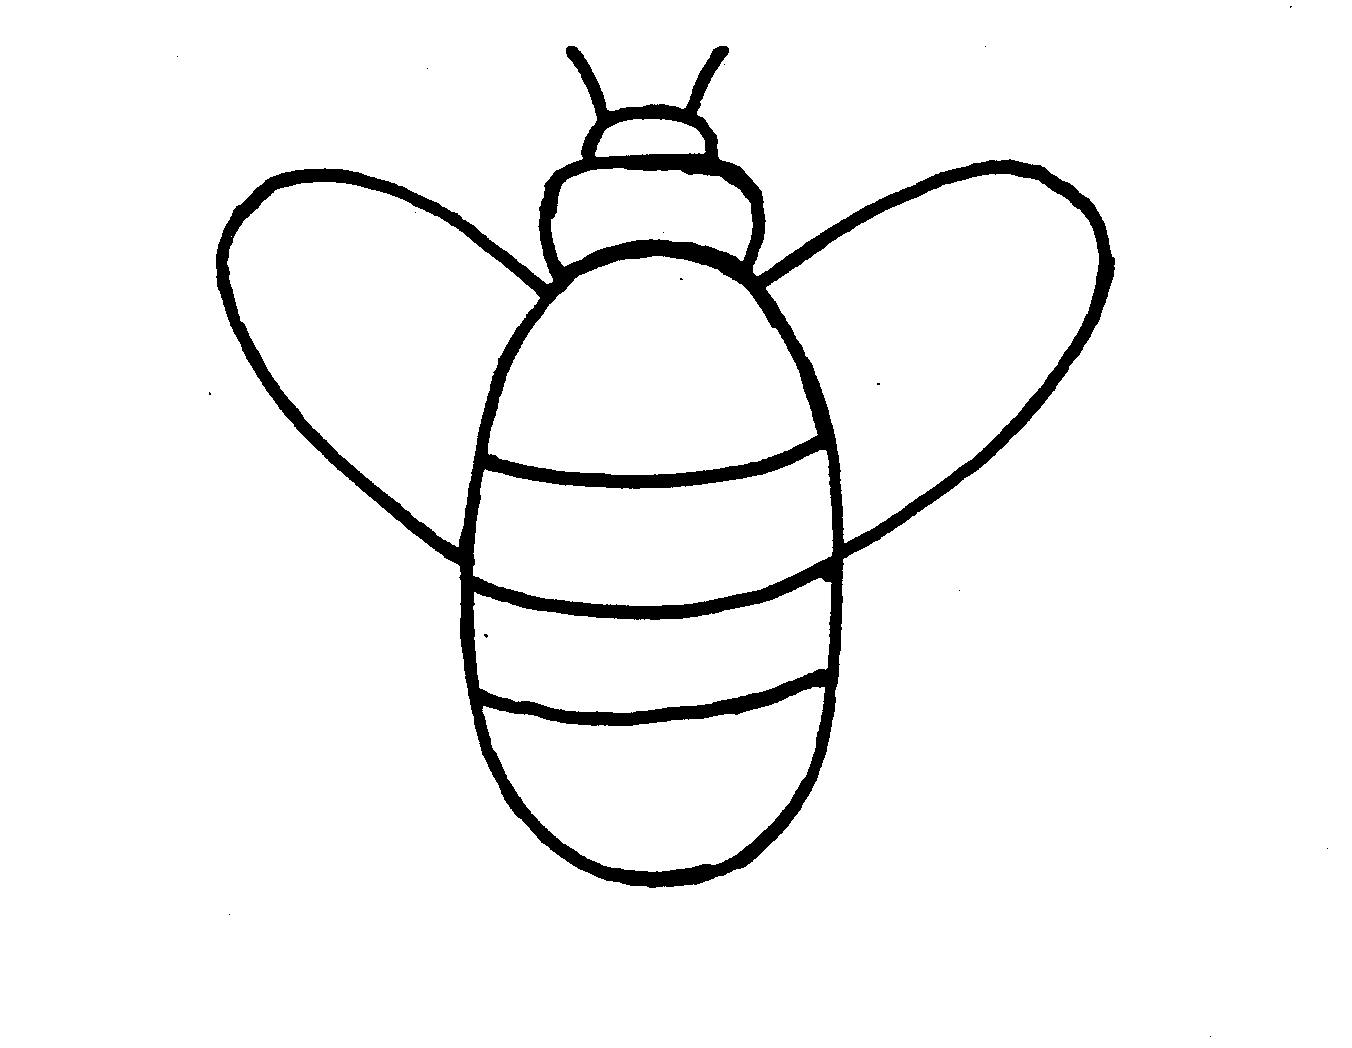  BEE